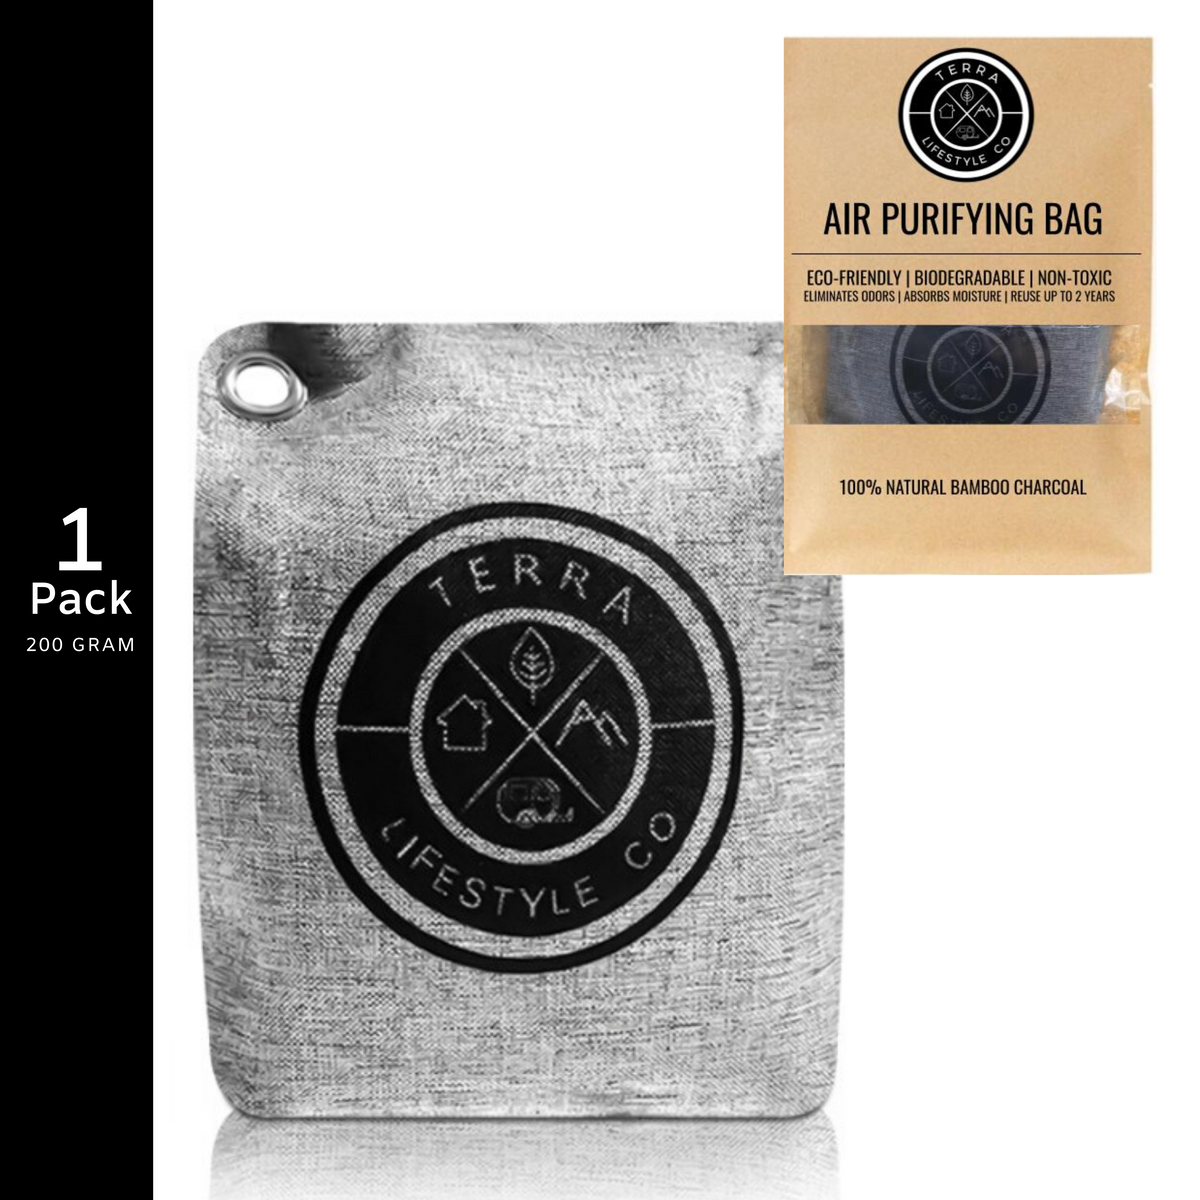 200 gram Air Purifying Bag